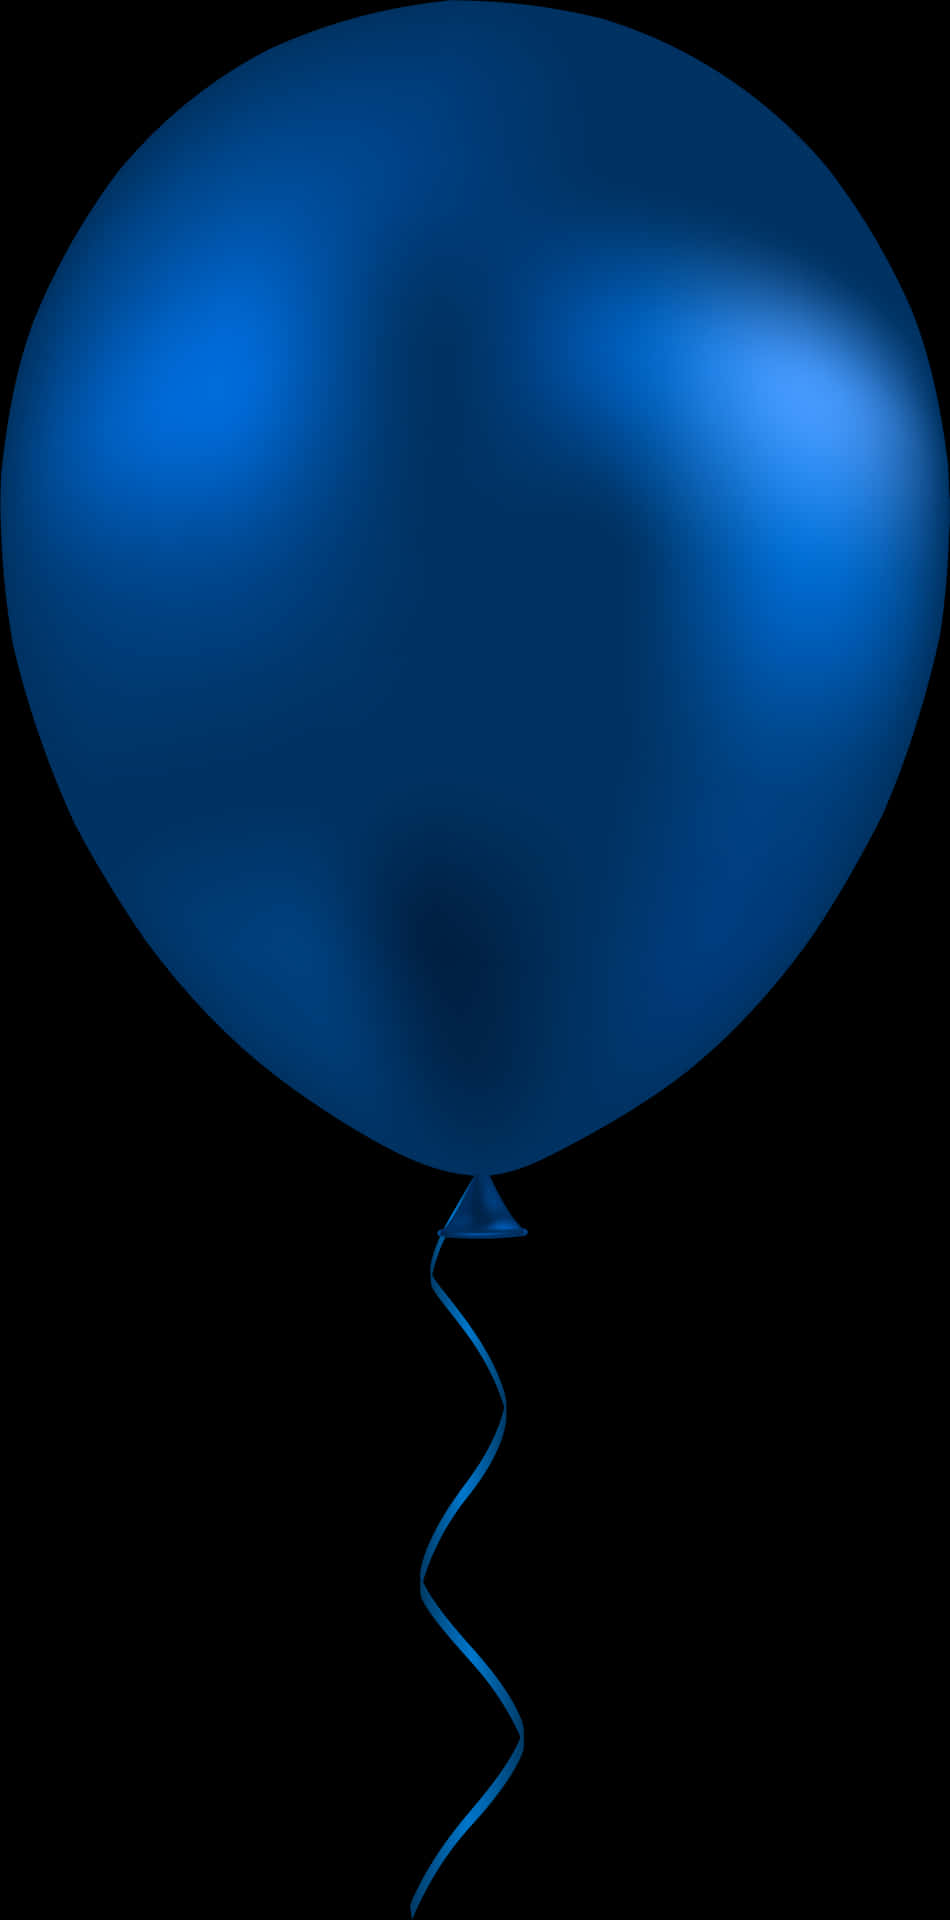 Blue Balloonon Black Background PNG